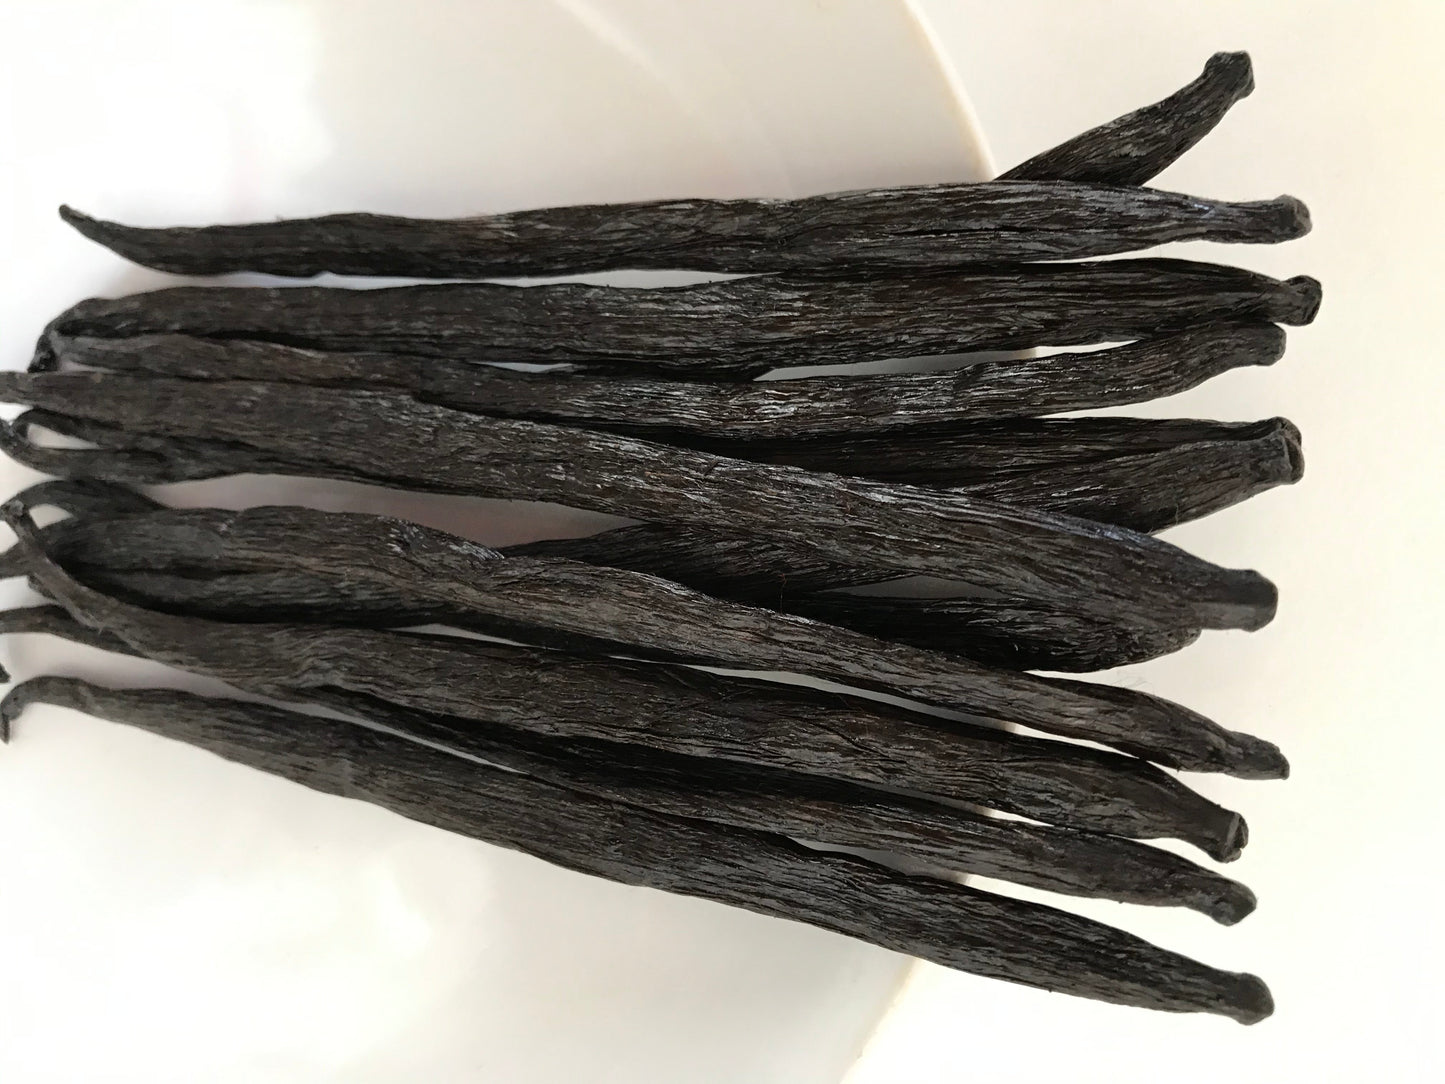 Ugandan Planifolia Vanilla Beans Grade A (By Weight)